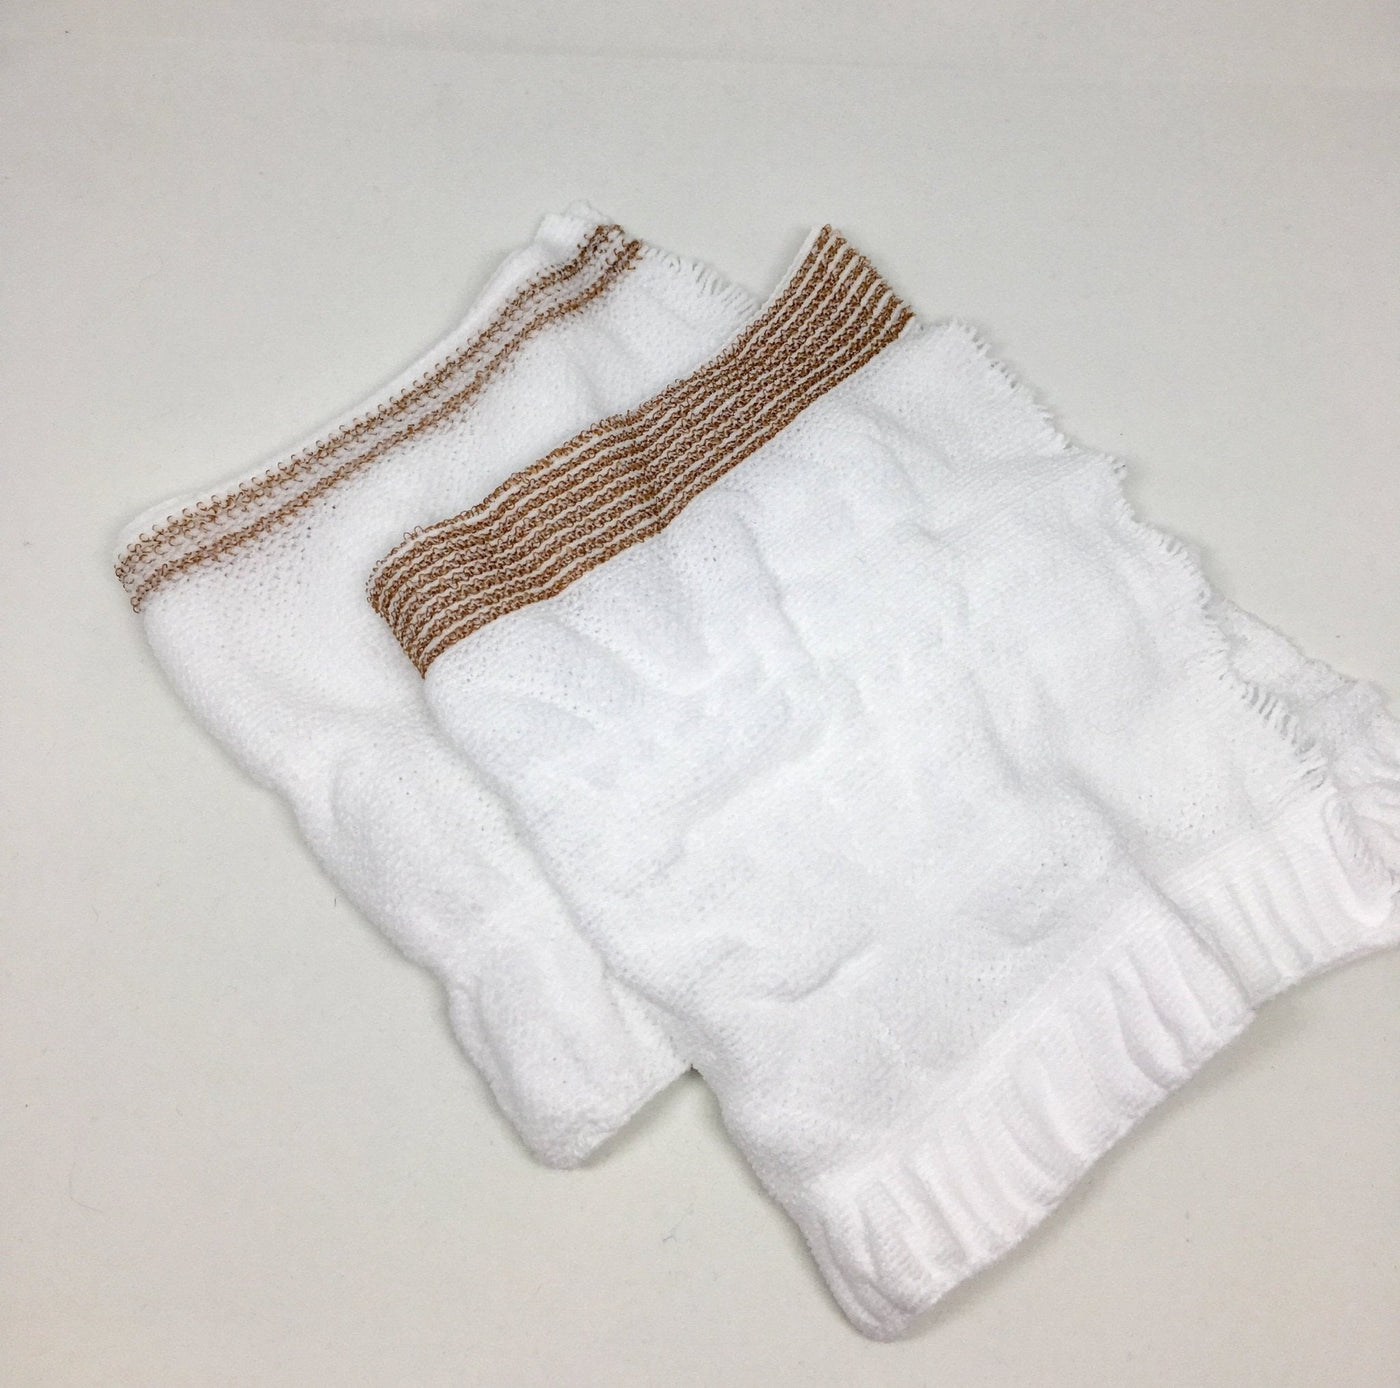  Mesh Panties Postpartum 20 Count Disposable Underwear  Postpartum For Women Hospital Maternity Briefs Soft, Breathable, Lightweight